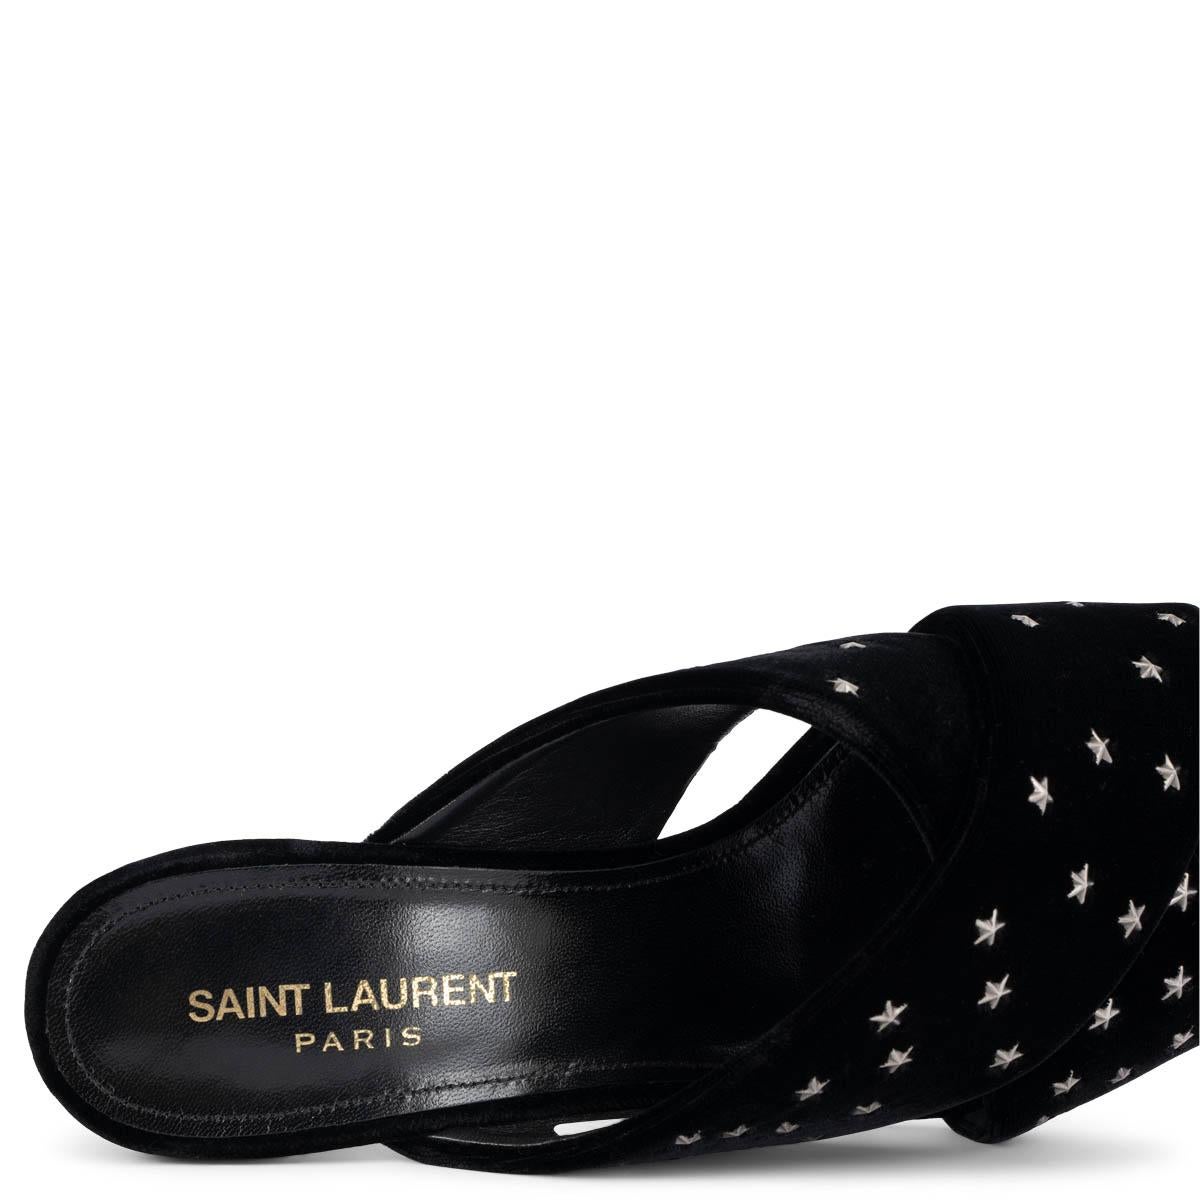 SAINT LAURENT black velvet LOU LOU 70 STAR STUDDED Sandals Shoes 37 For Sale 2